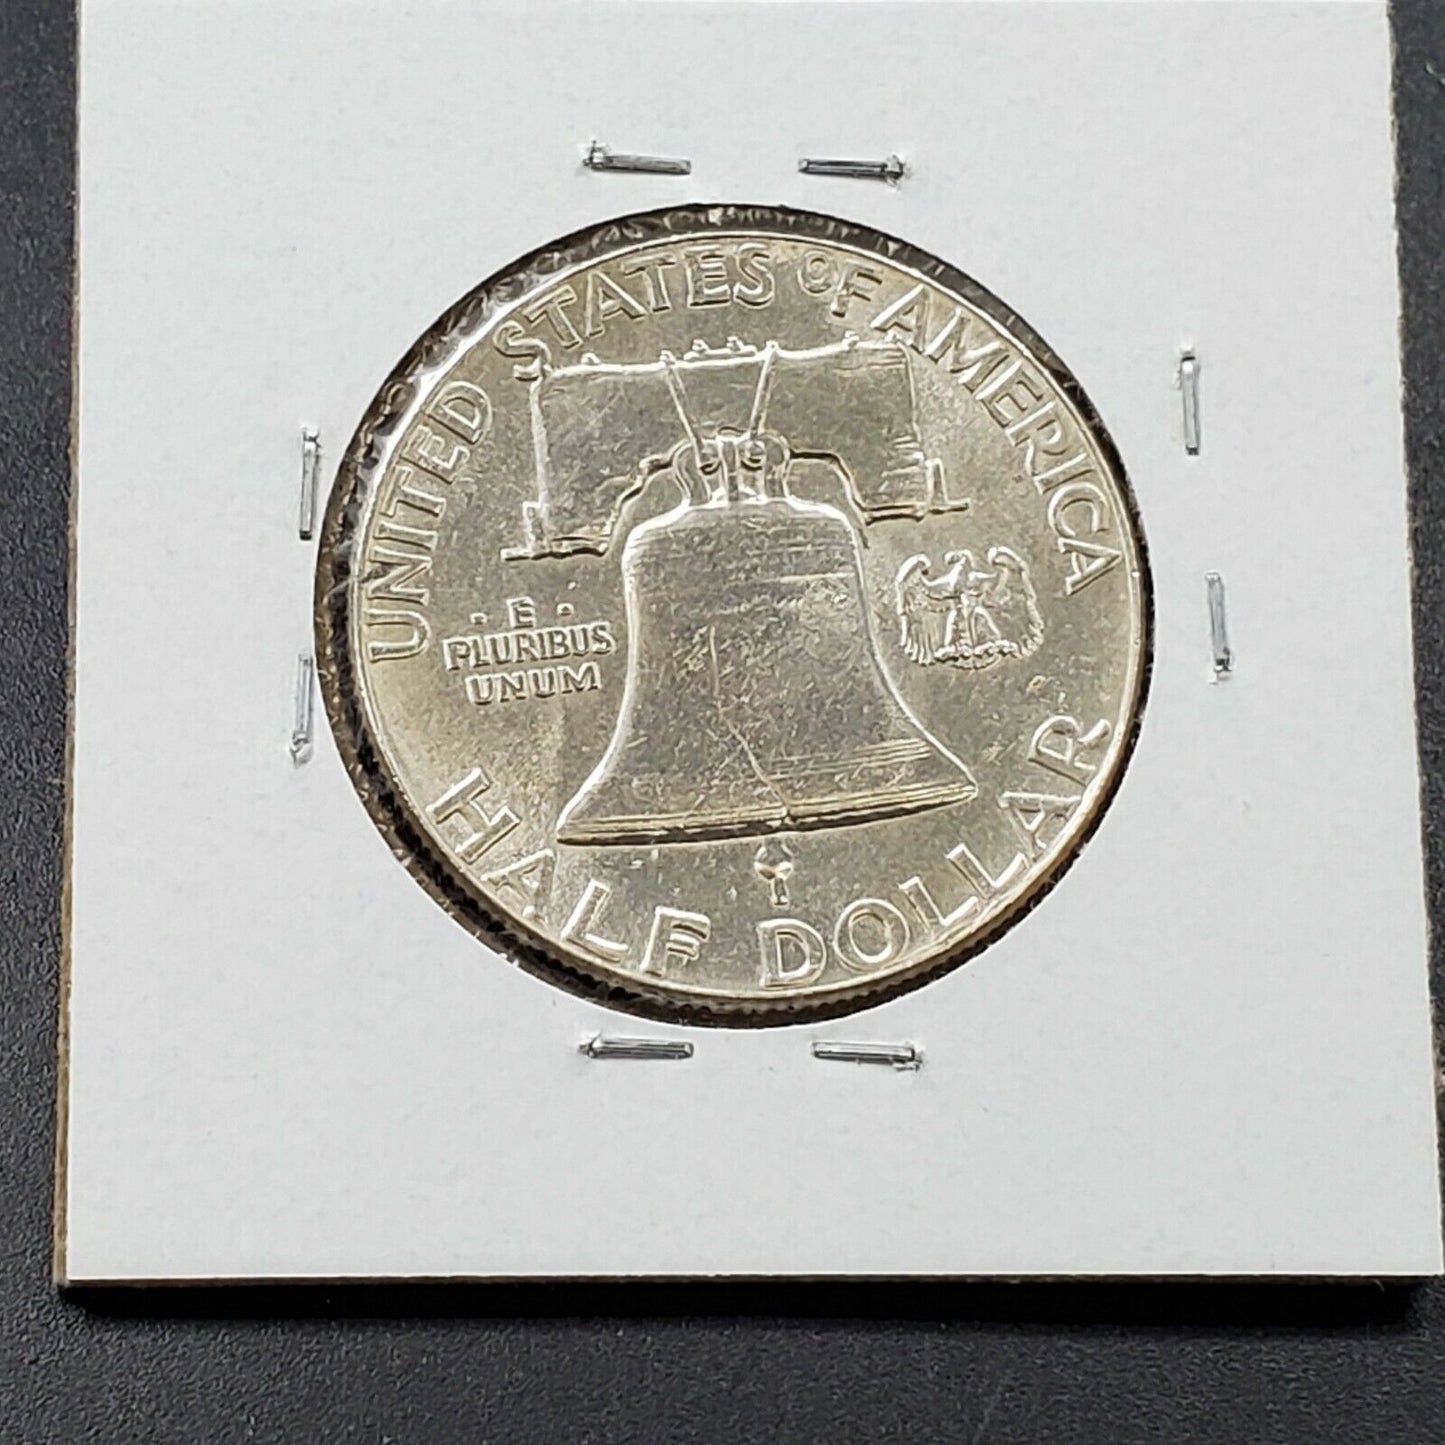 1951 P Franklin Silver 90% Half Dollar Coin Choice BU Uncirculated New Condition